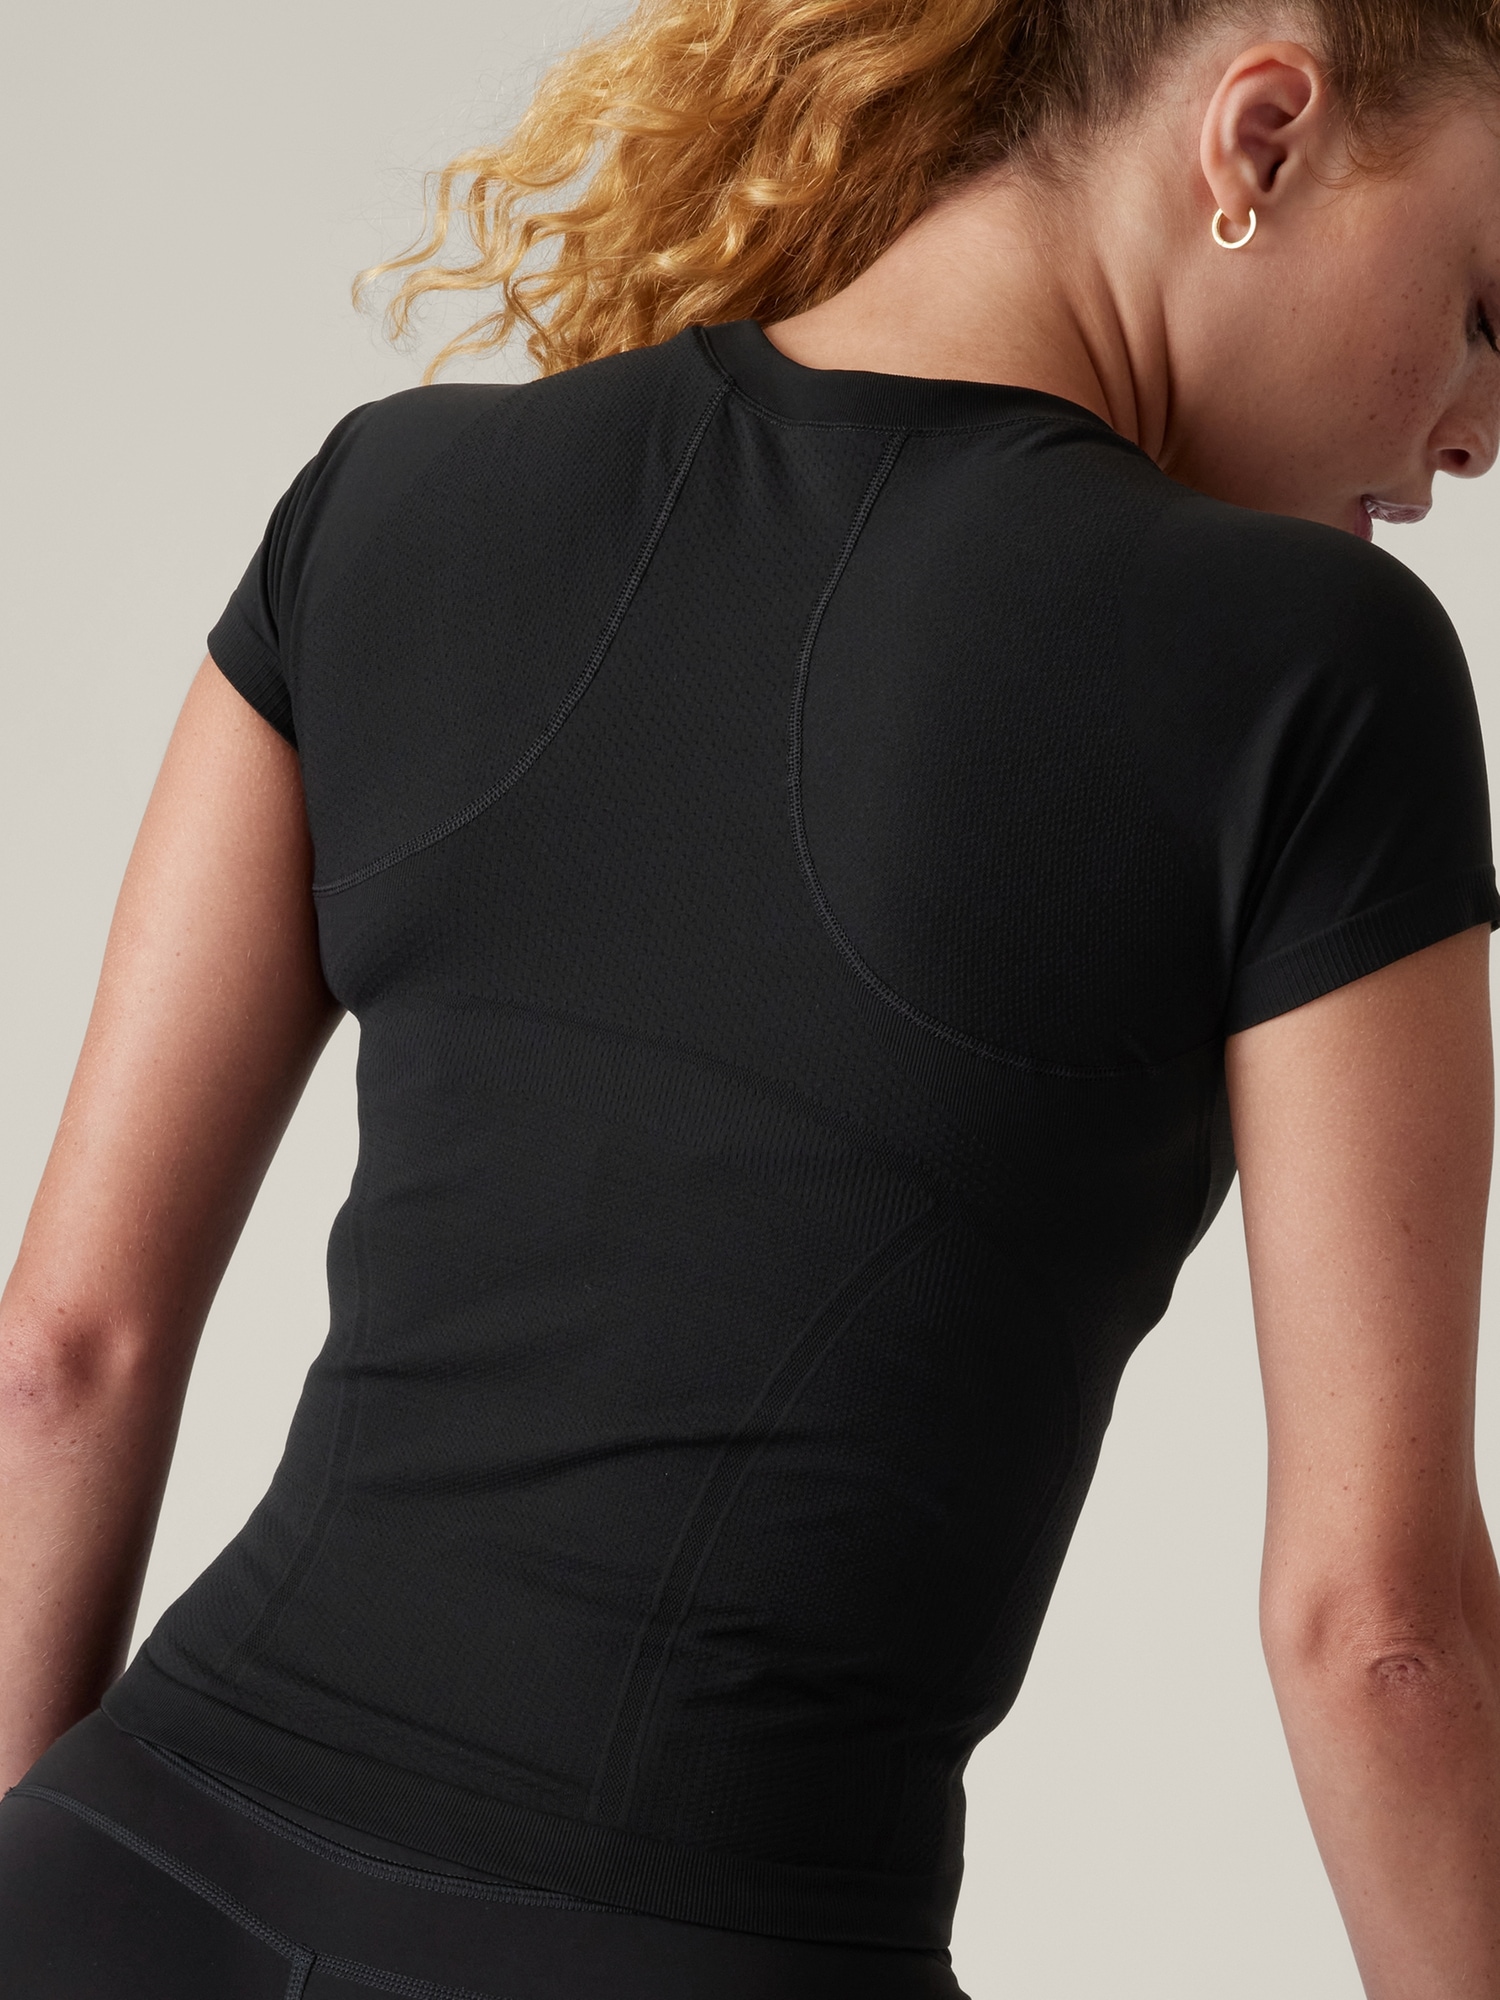 NINQ Women's Compression Shirts Compression Long Sleeve Yoga